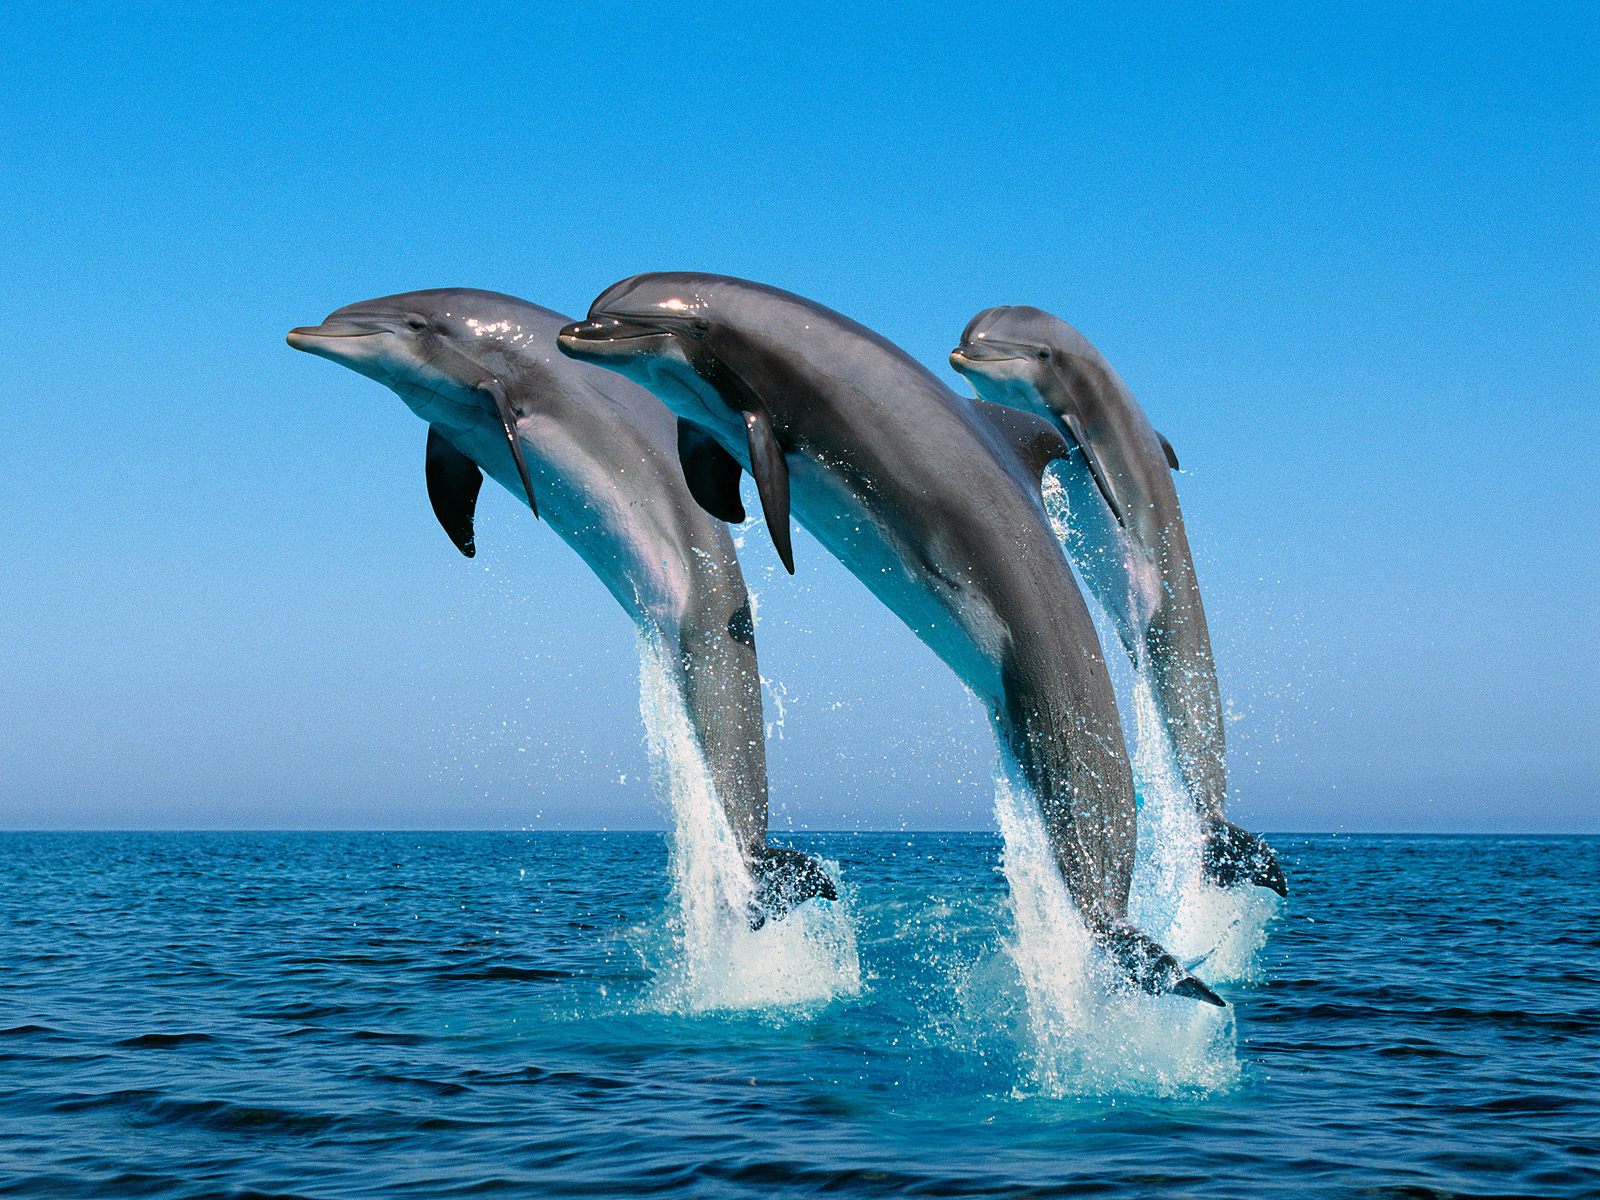 HD Dolphin Wallpaper